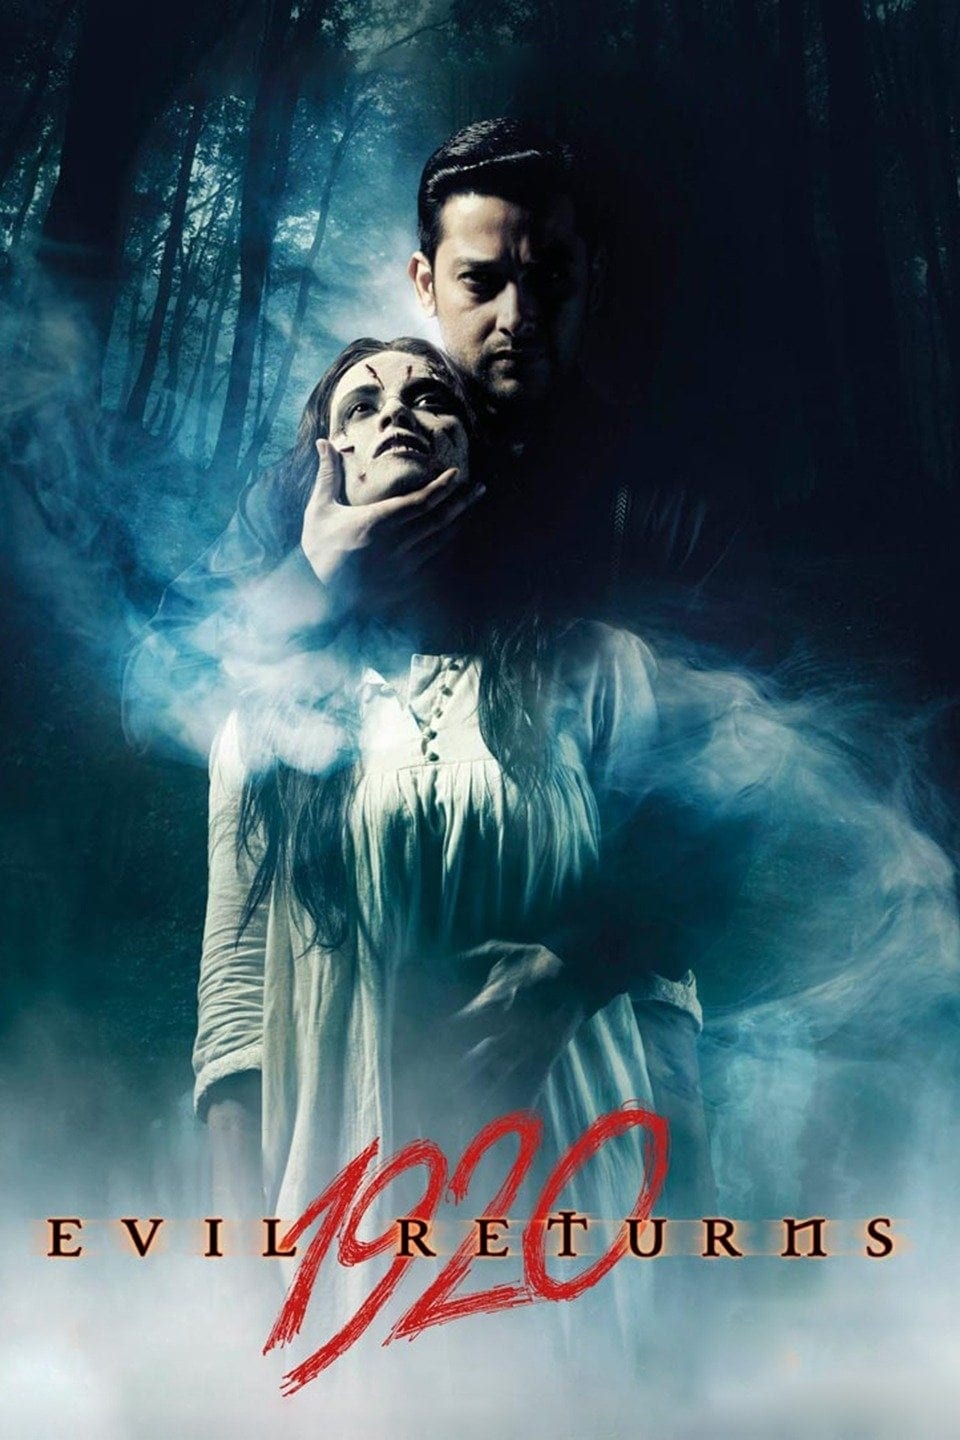 Poster for the movie "1920: Evil Returns"